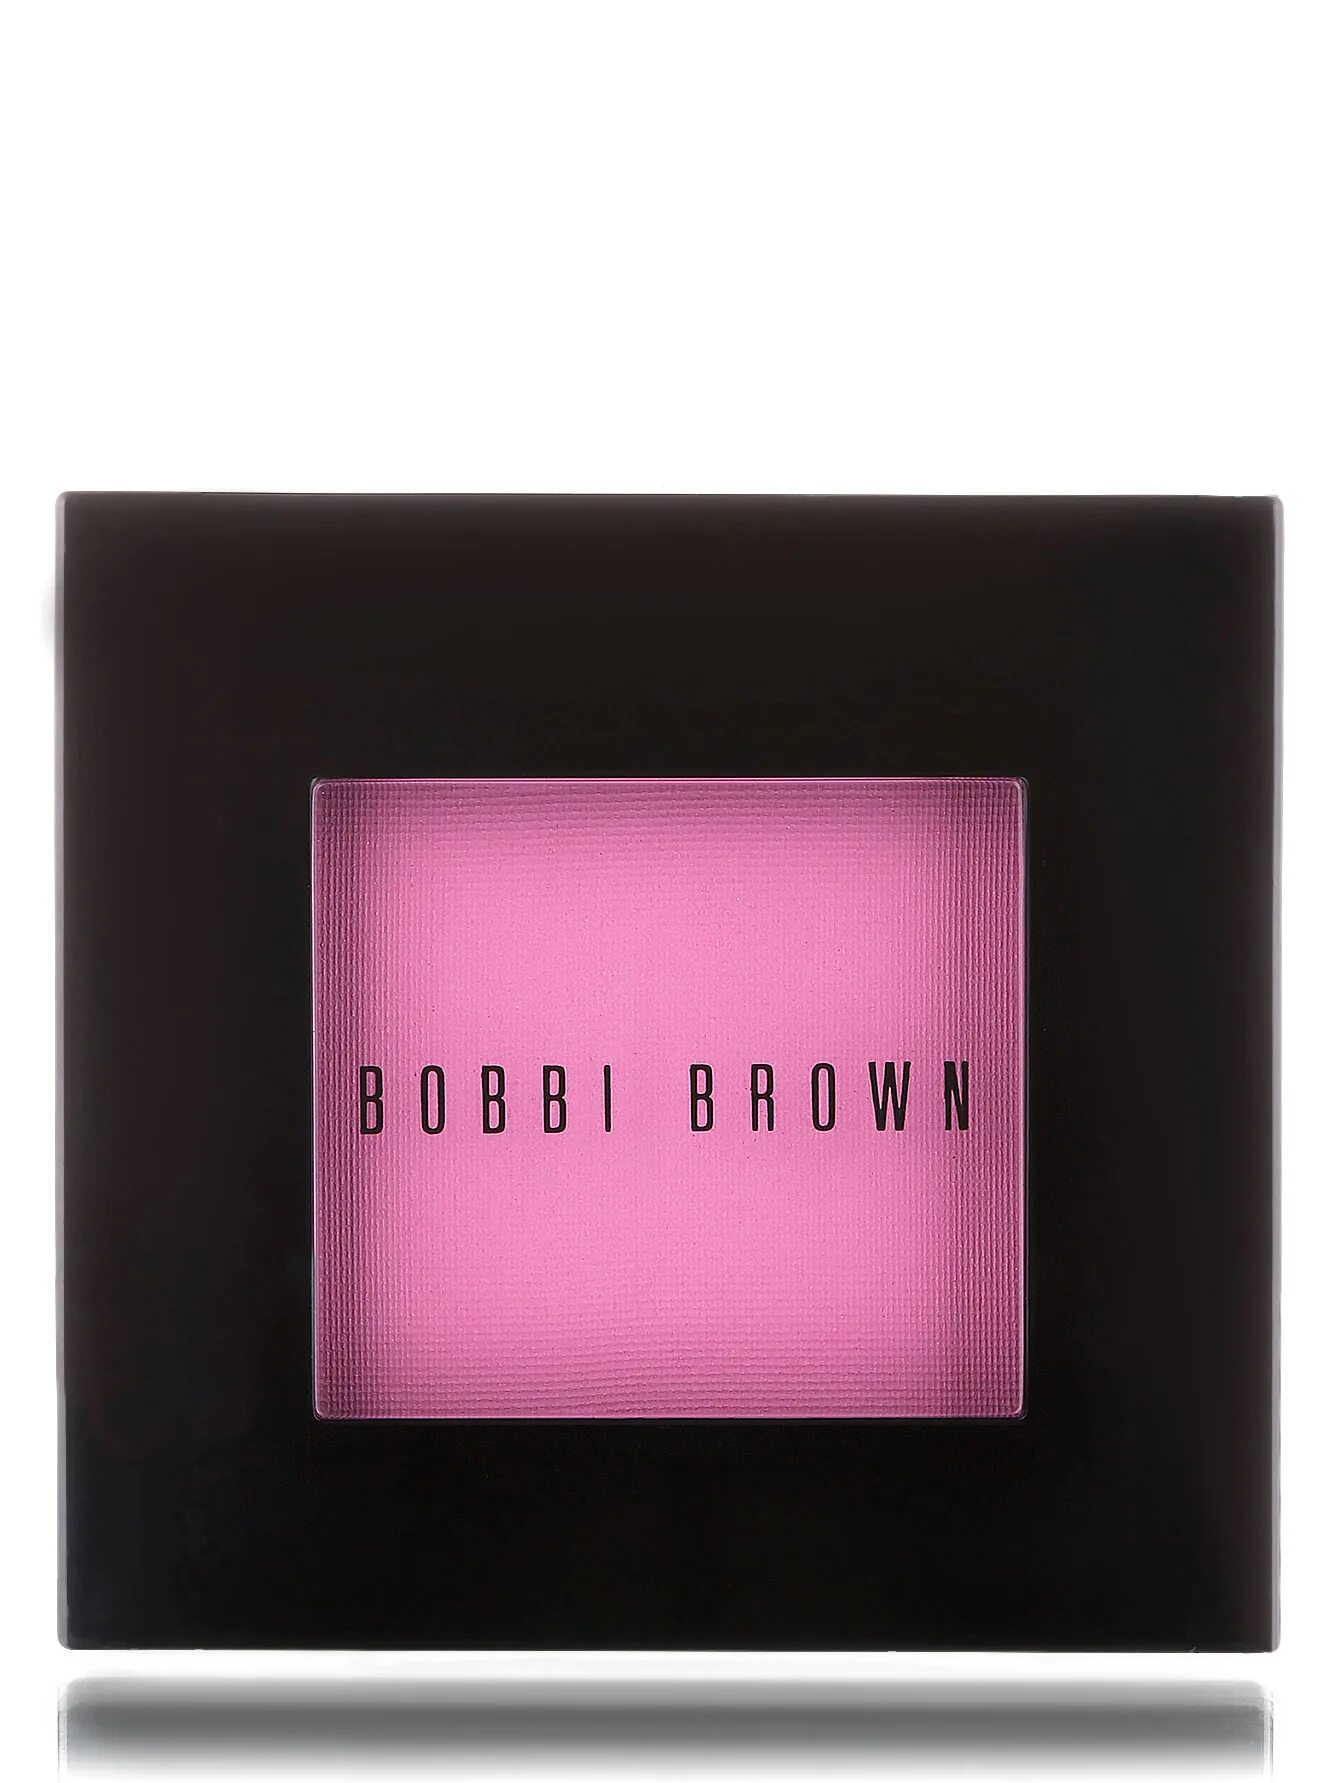 Blush brown. Румяна Бобби Браун pale Pink. Bobbi Brown румяна. Румяна Bobbi Brown pretty Pink. Румяна Bobbi Brown Peony.